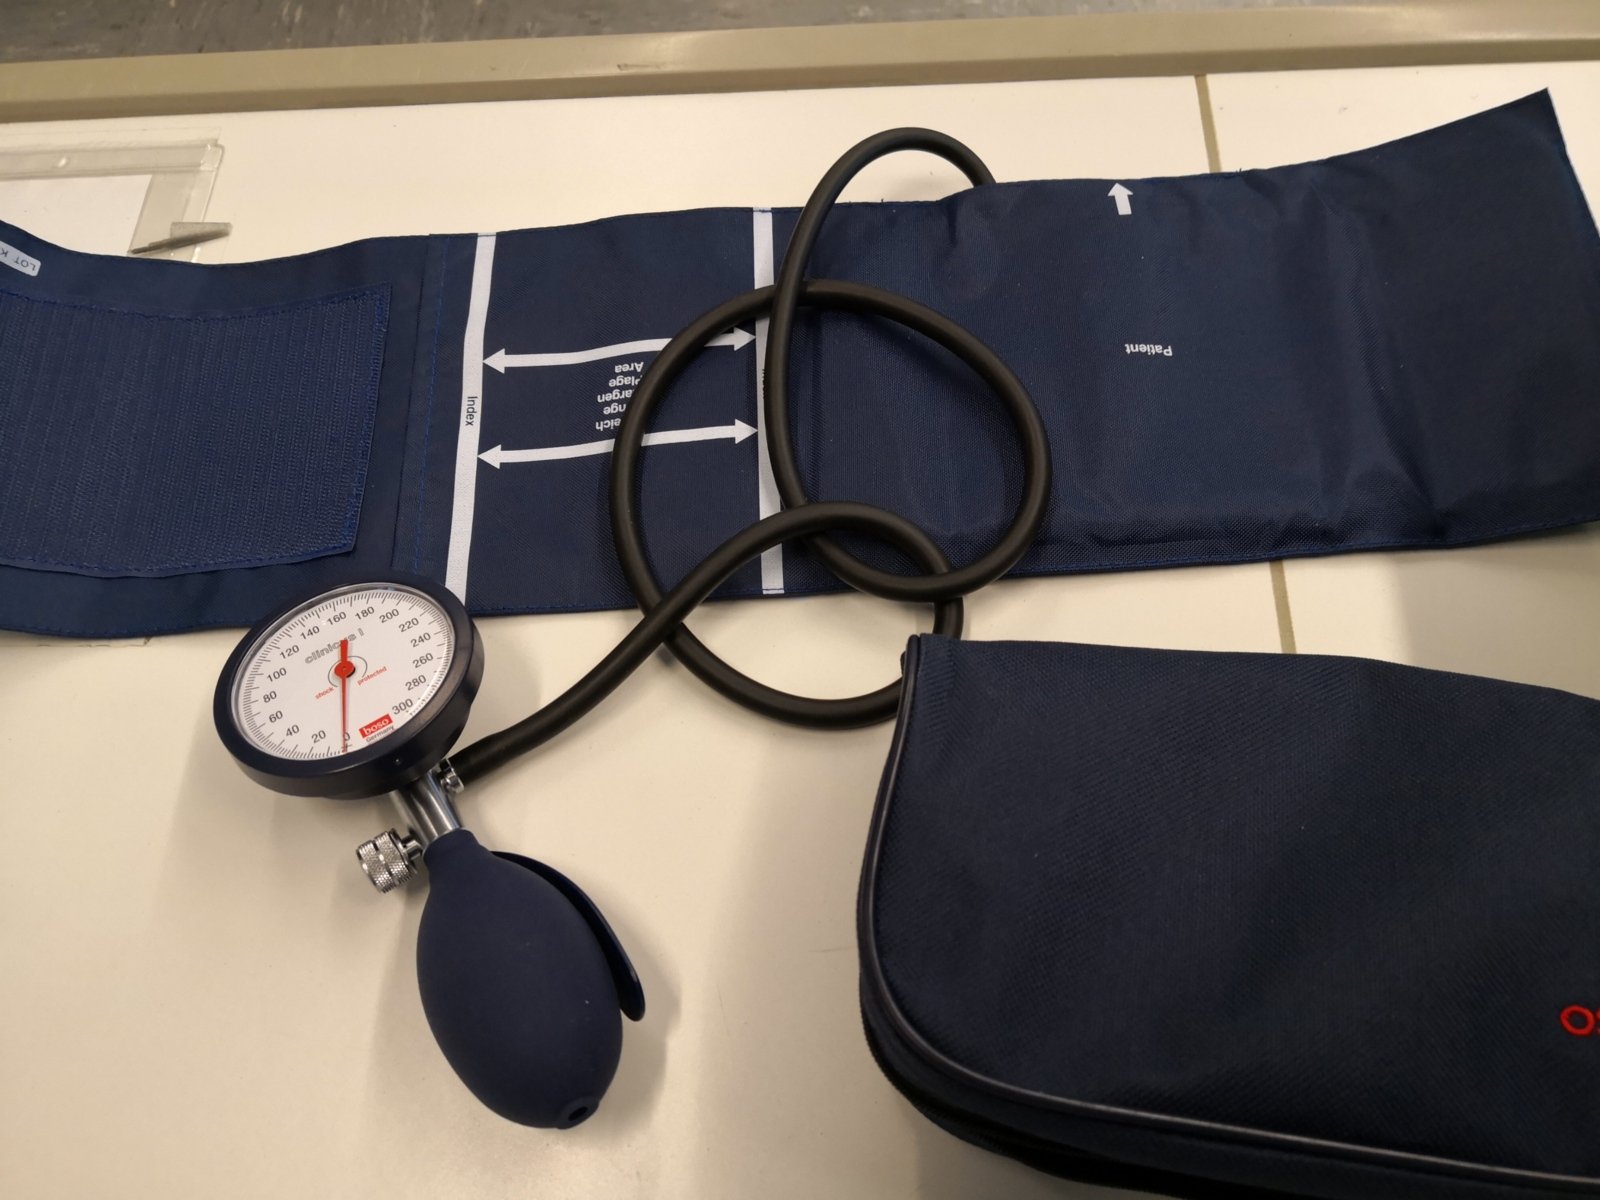 BIO 2019 Blutdruck-Messgerät (c) KFG